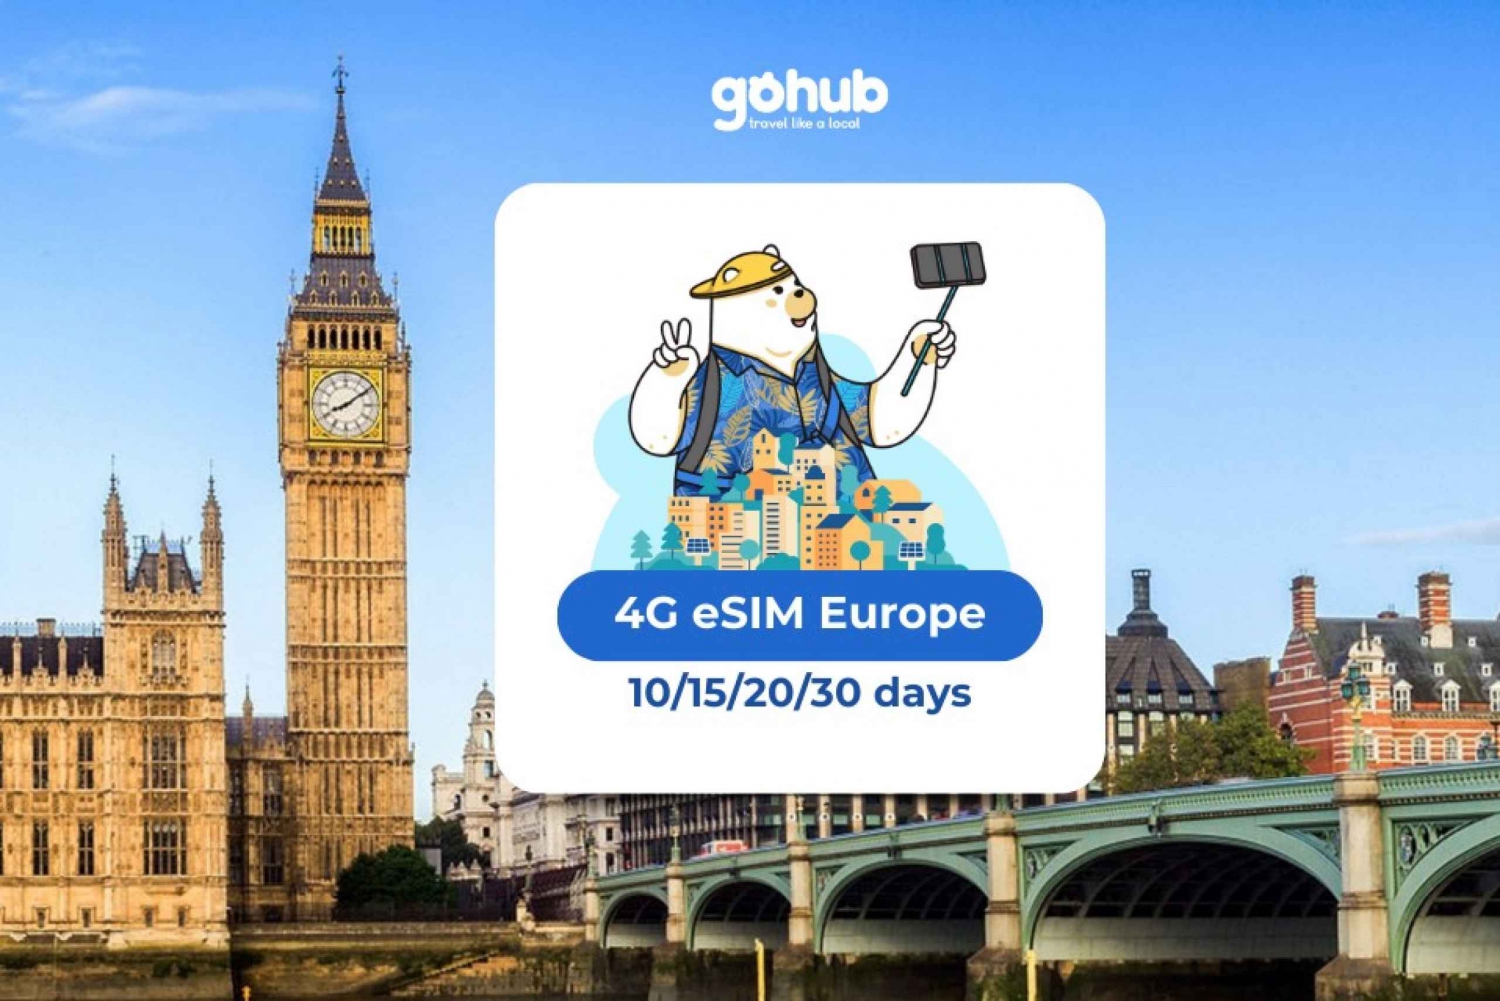 Europa: eSIM Mobile Data (33 paesi) - 10/15/20/30 giorni